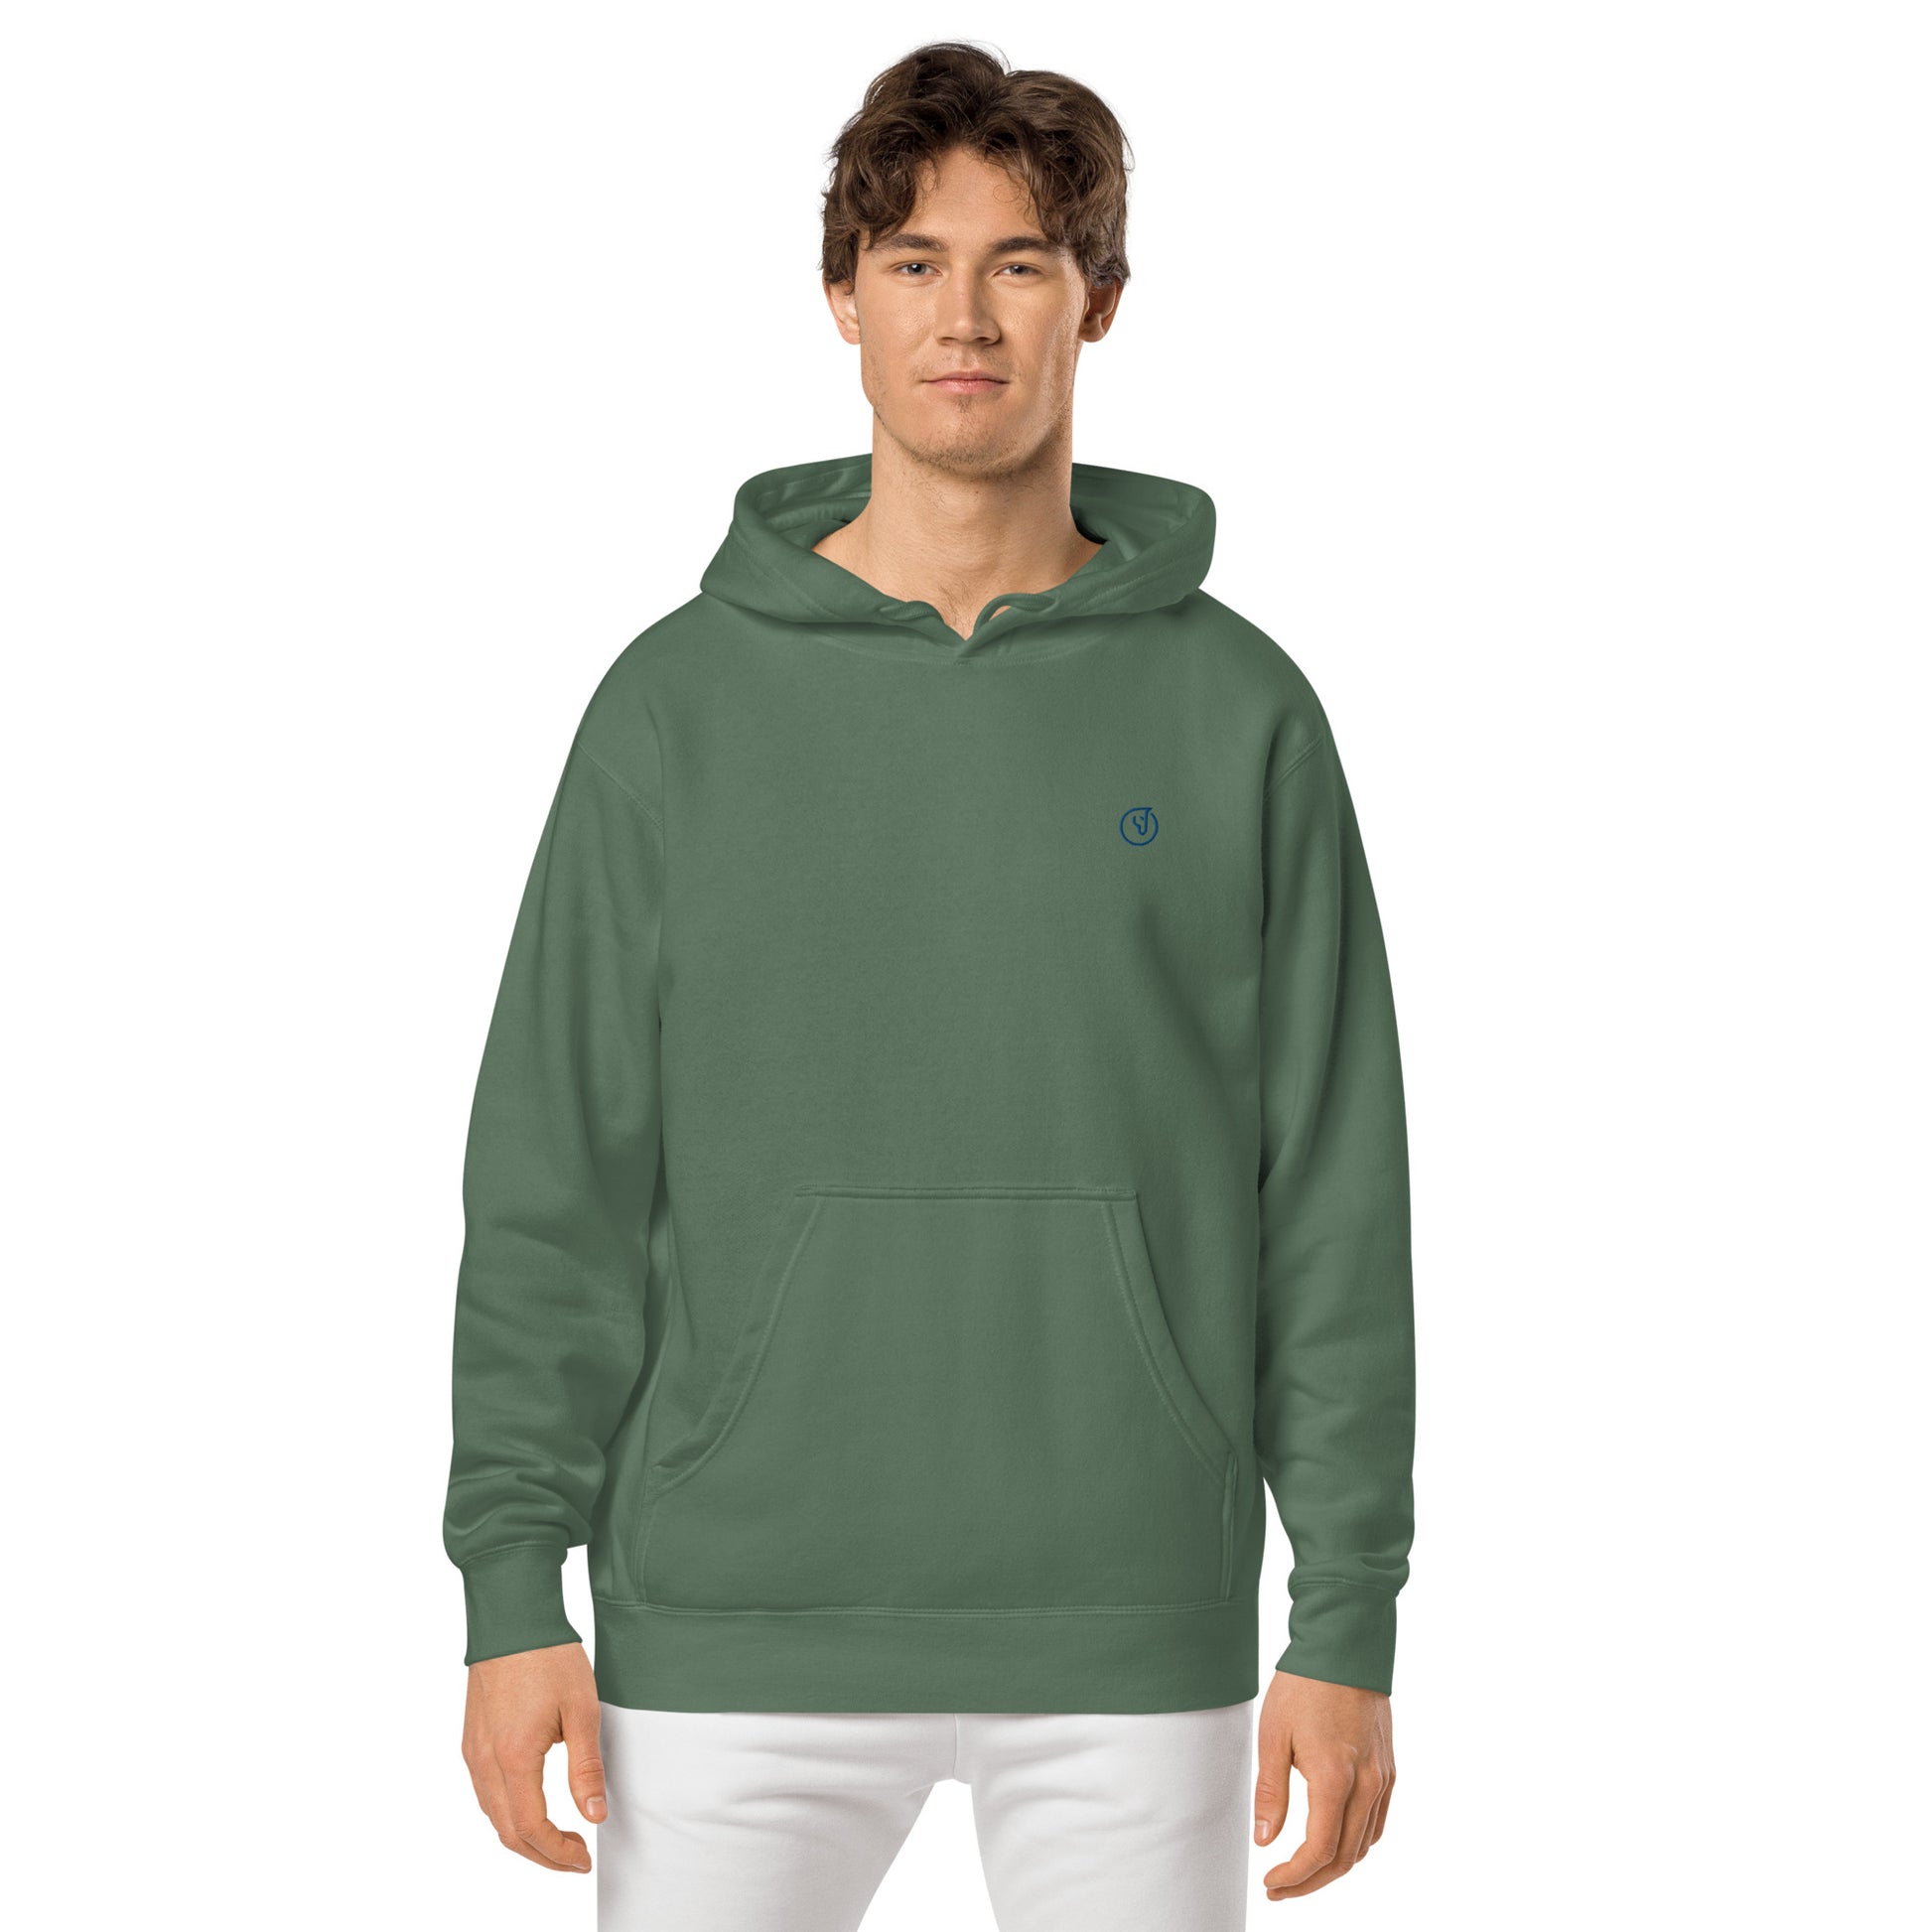 Humble sportswear, men’s hoodies, matching hoodies, heavyweight hoodies for men